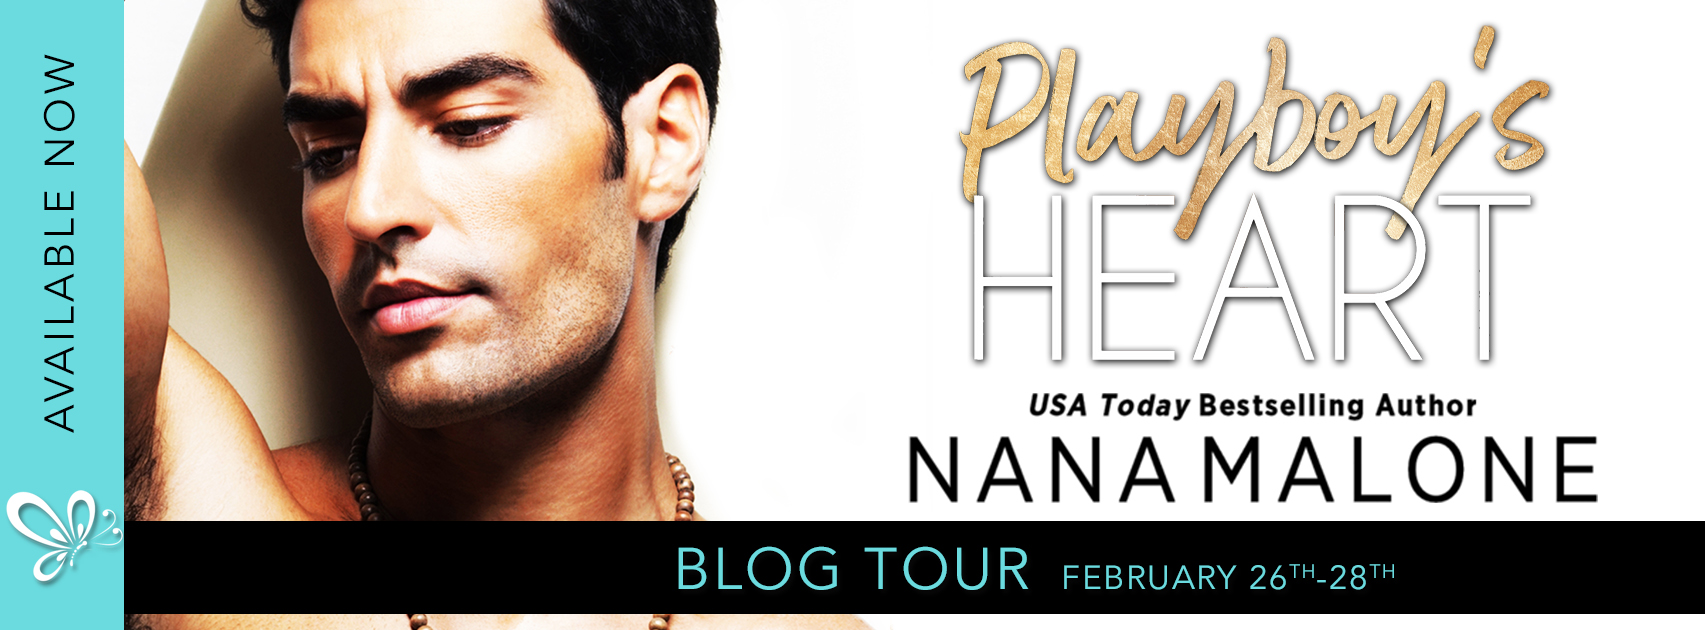 Playboy’s Heart by Nana Malone Blog Tour Review